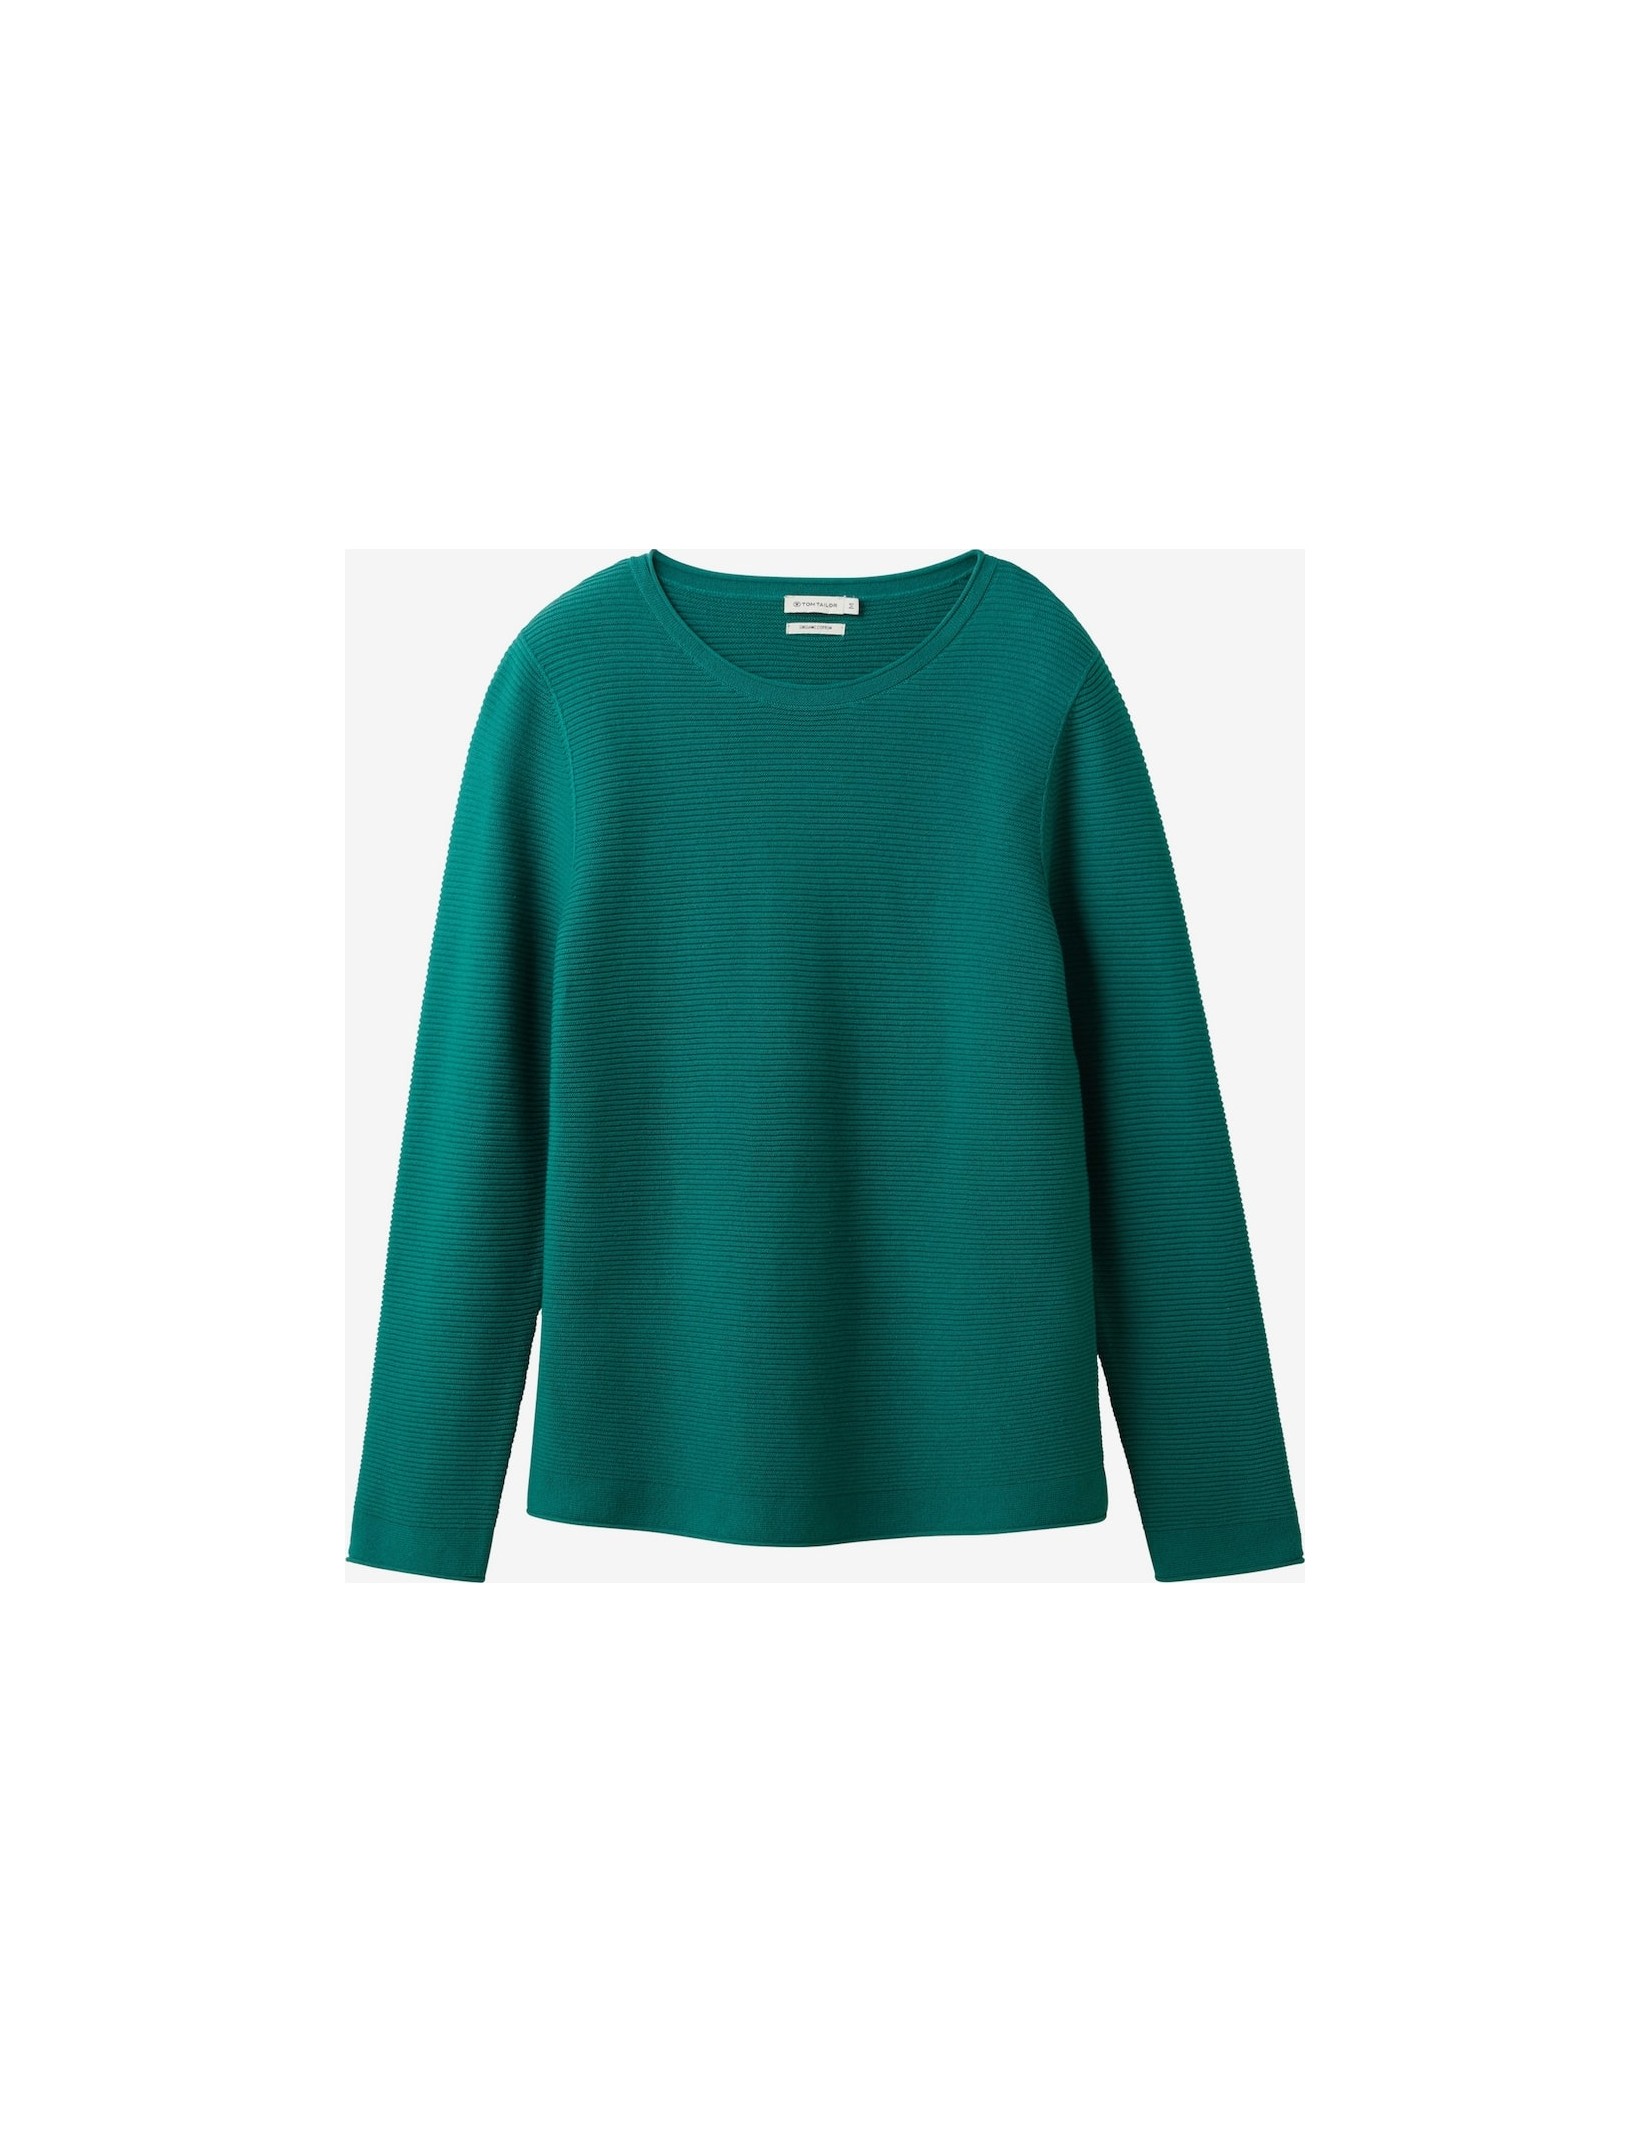 TOM TAILOR Simple sweatshirt FASHION BON 1016350-21178 